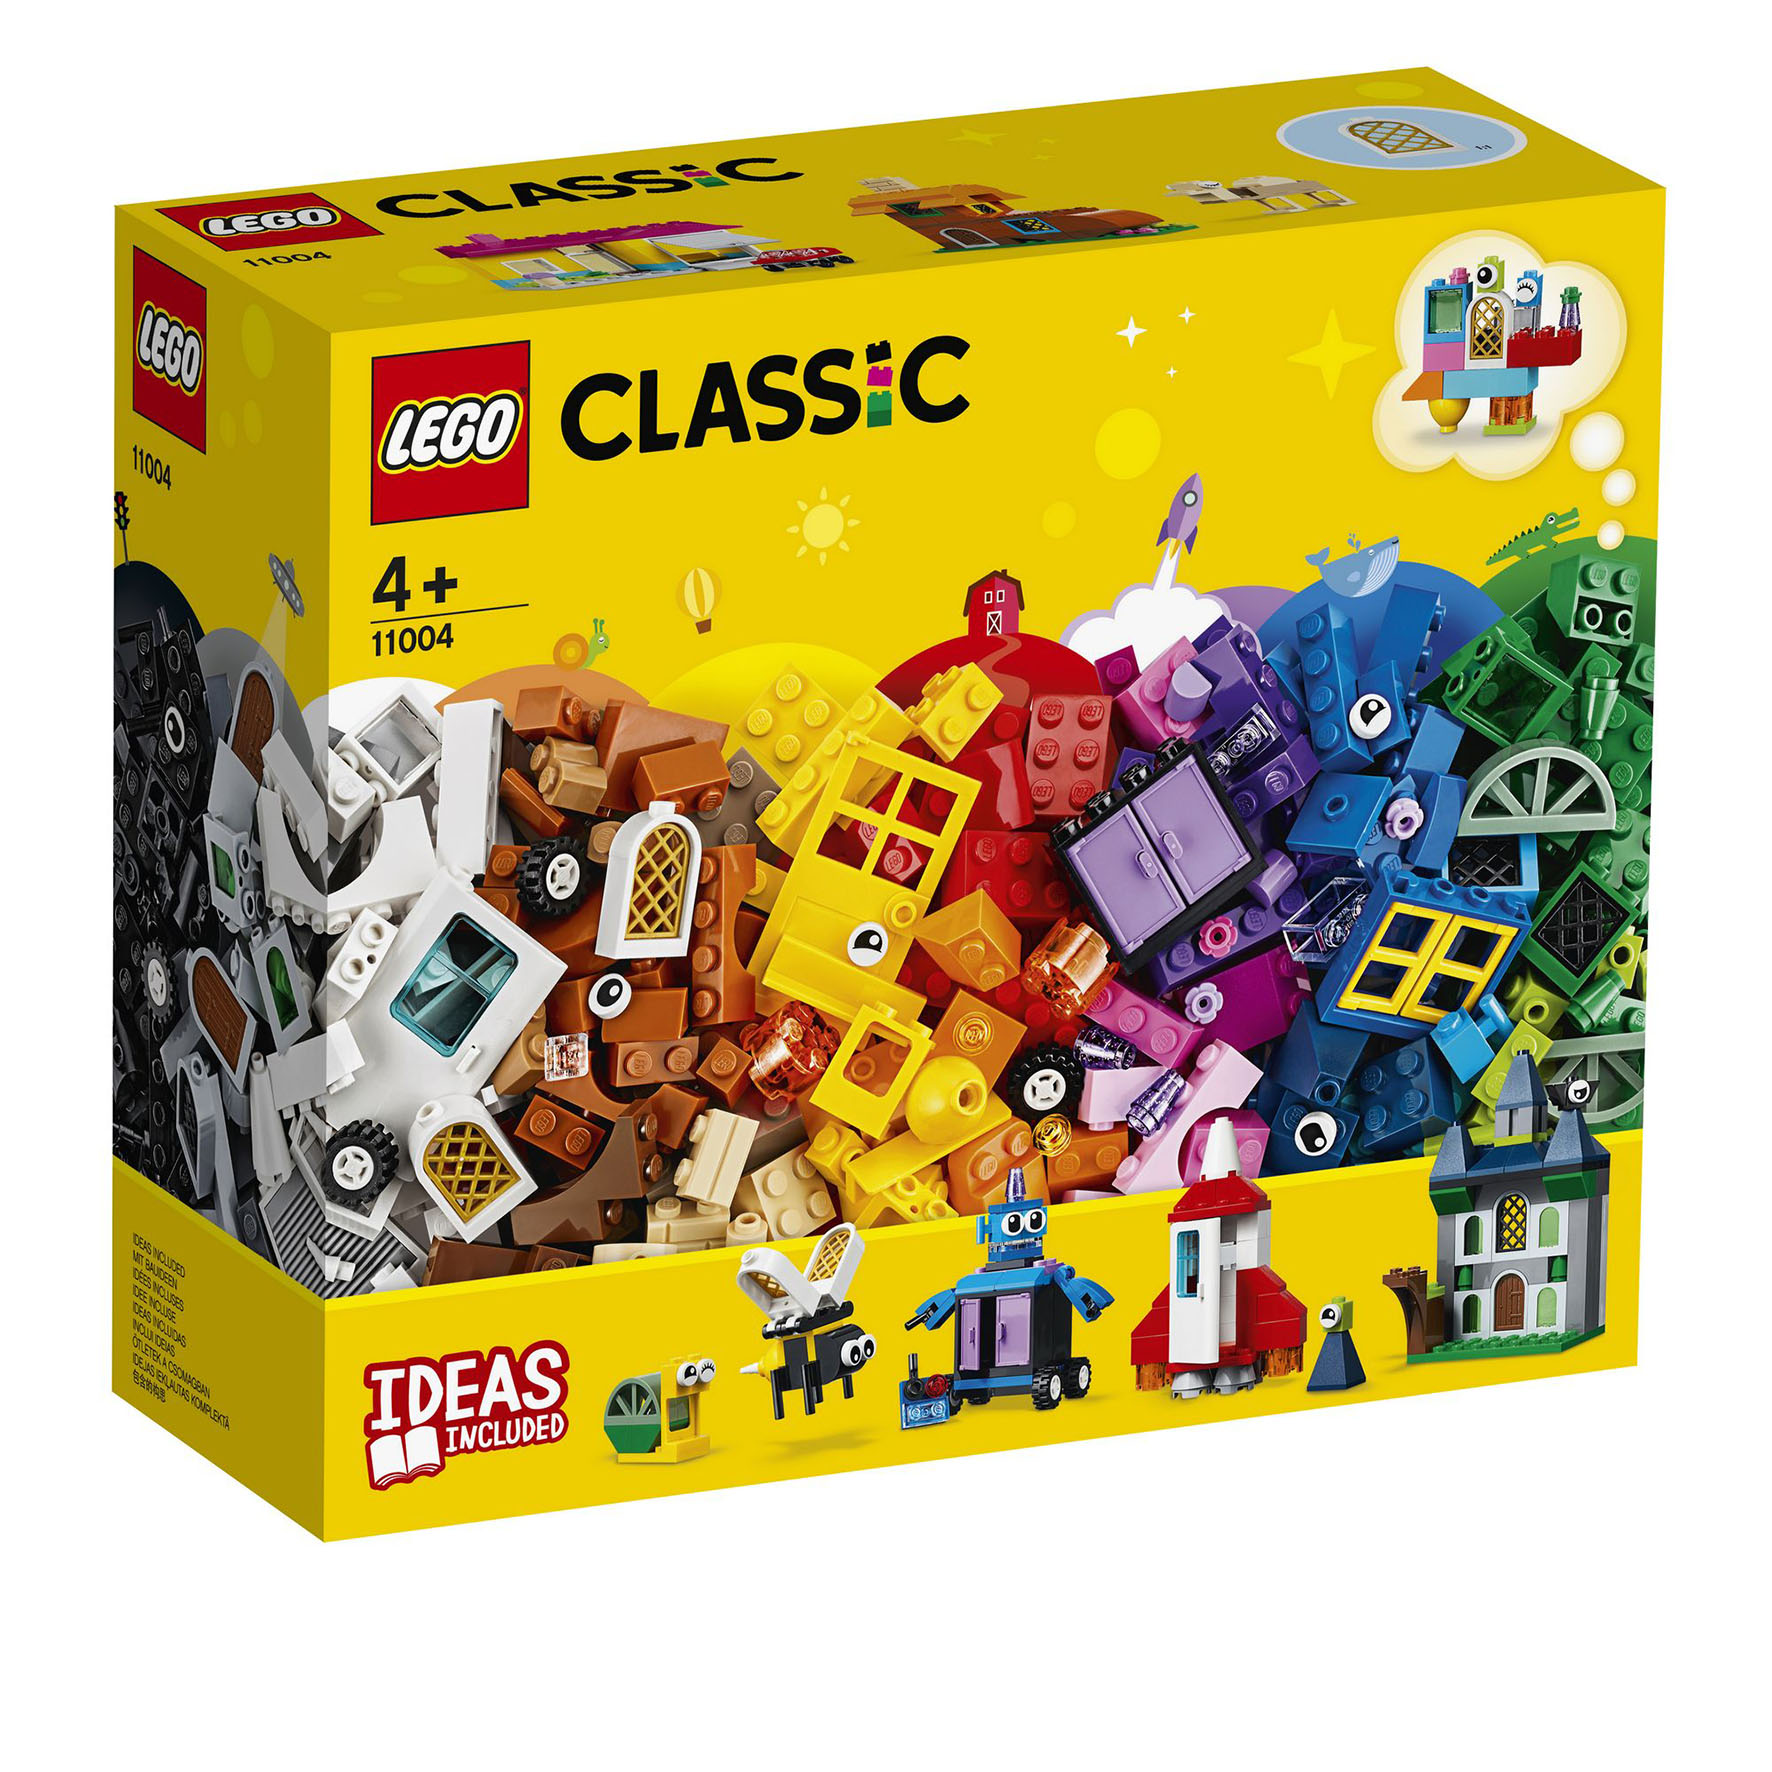 FINESTRE CREATIVITA LEGO CLASS